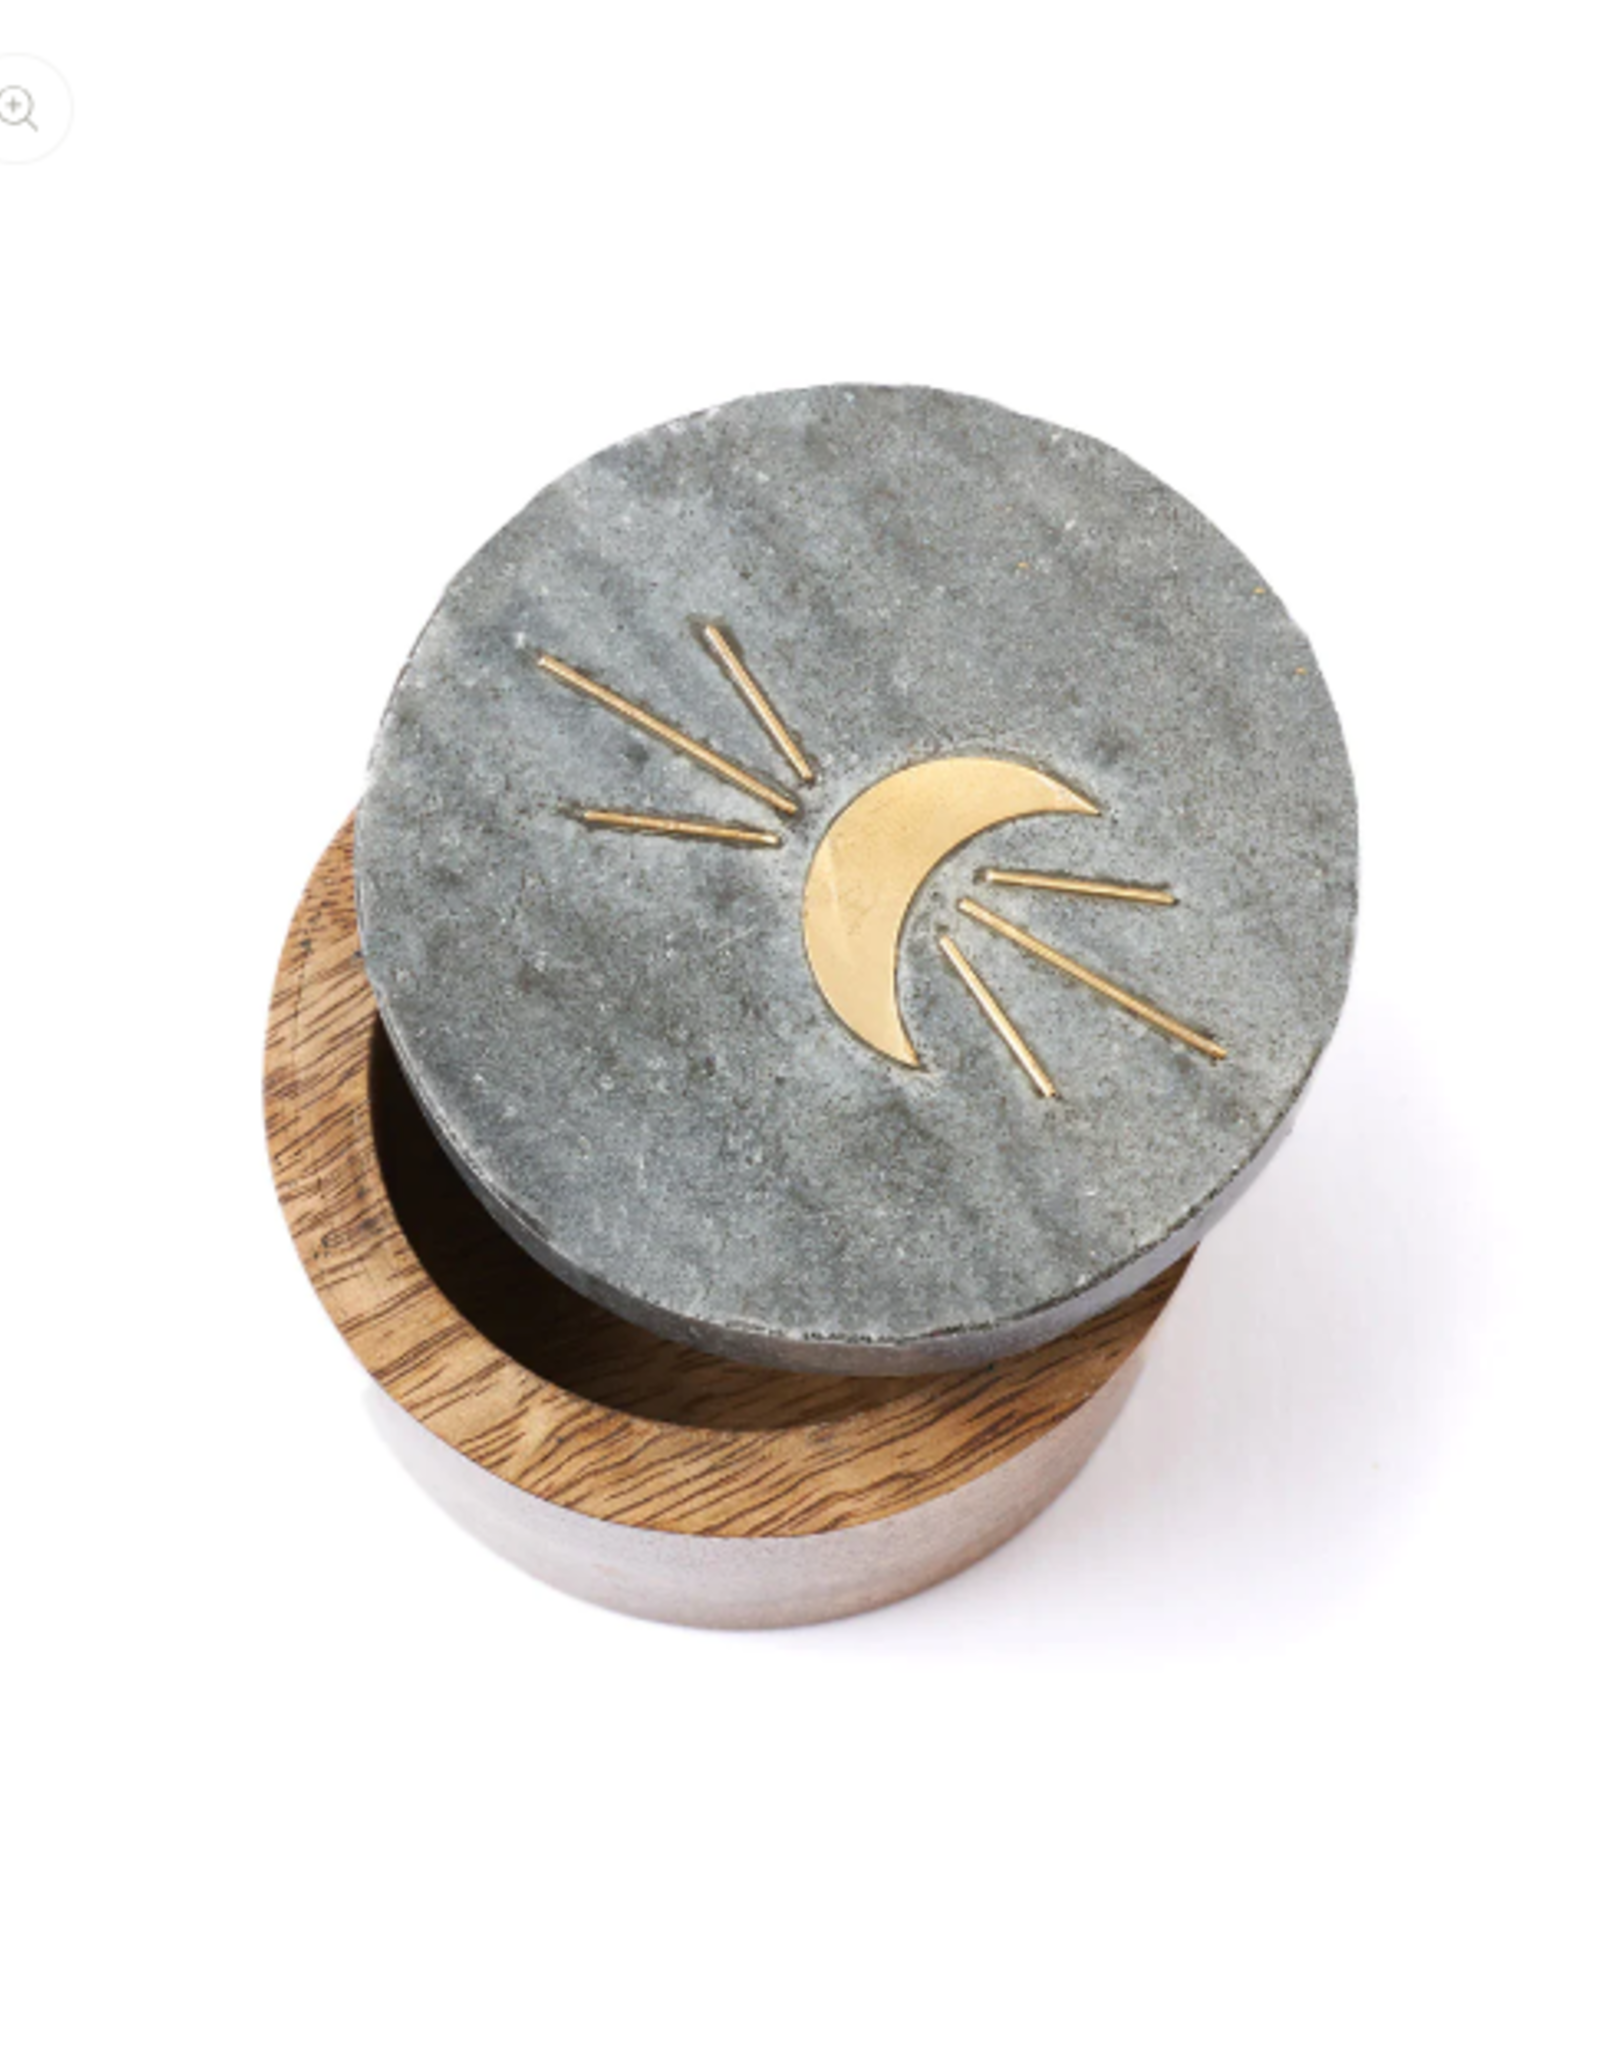 Matr Boomie Indukala Moon Phase Round Keepsake Box - Black Marble, Wood, Brass